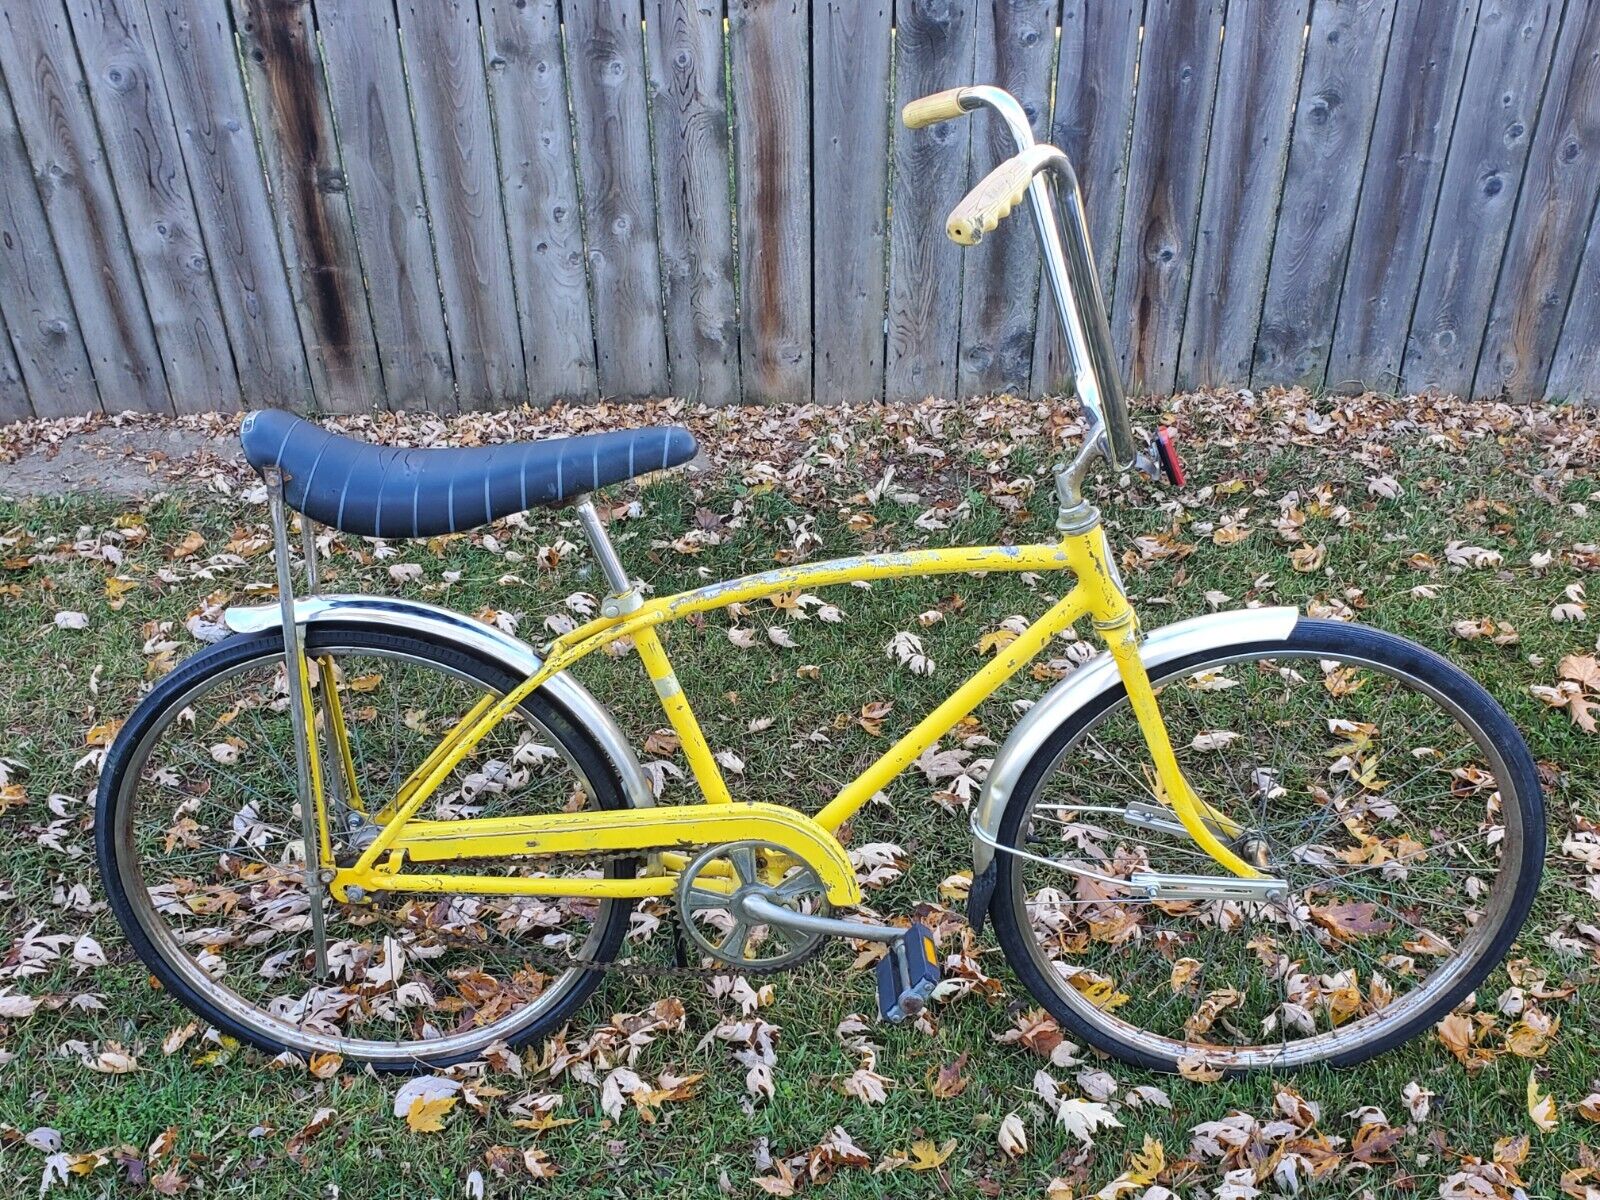 Vintage Yellow 1972 Schwinn Manta Ray Coaster Banana Seat Krate Bicycle - As-is 